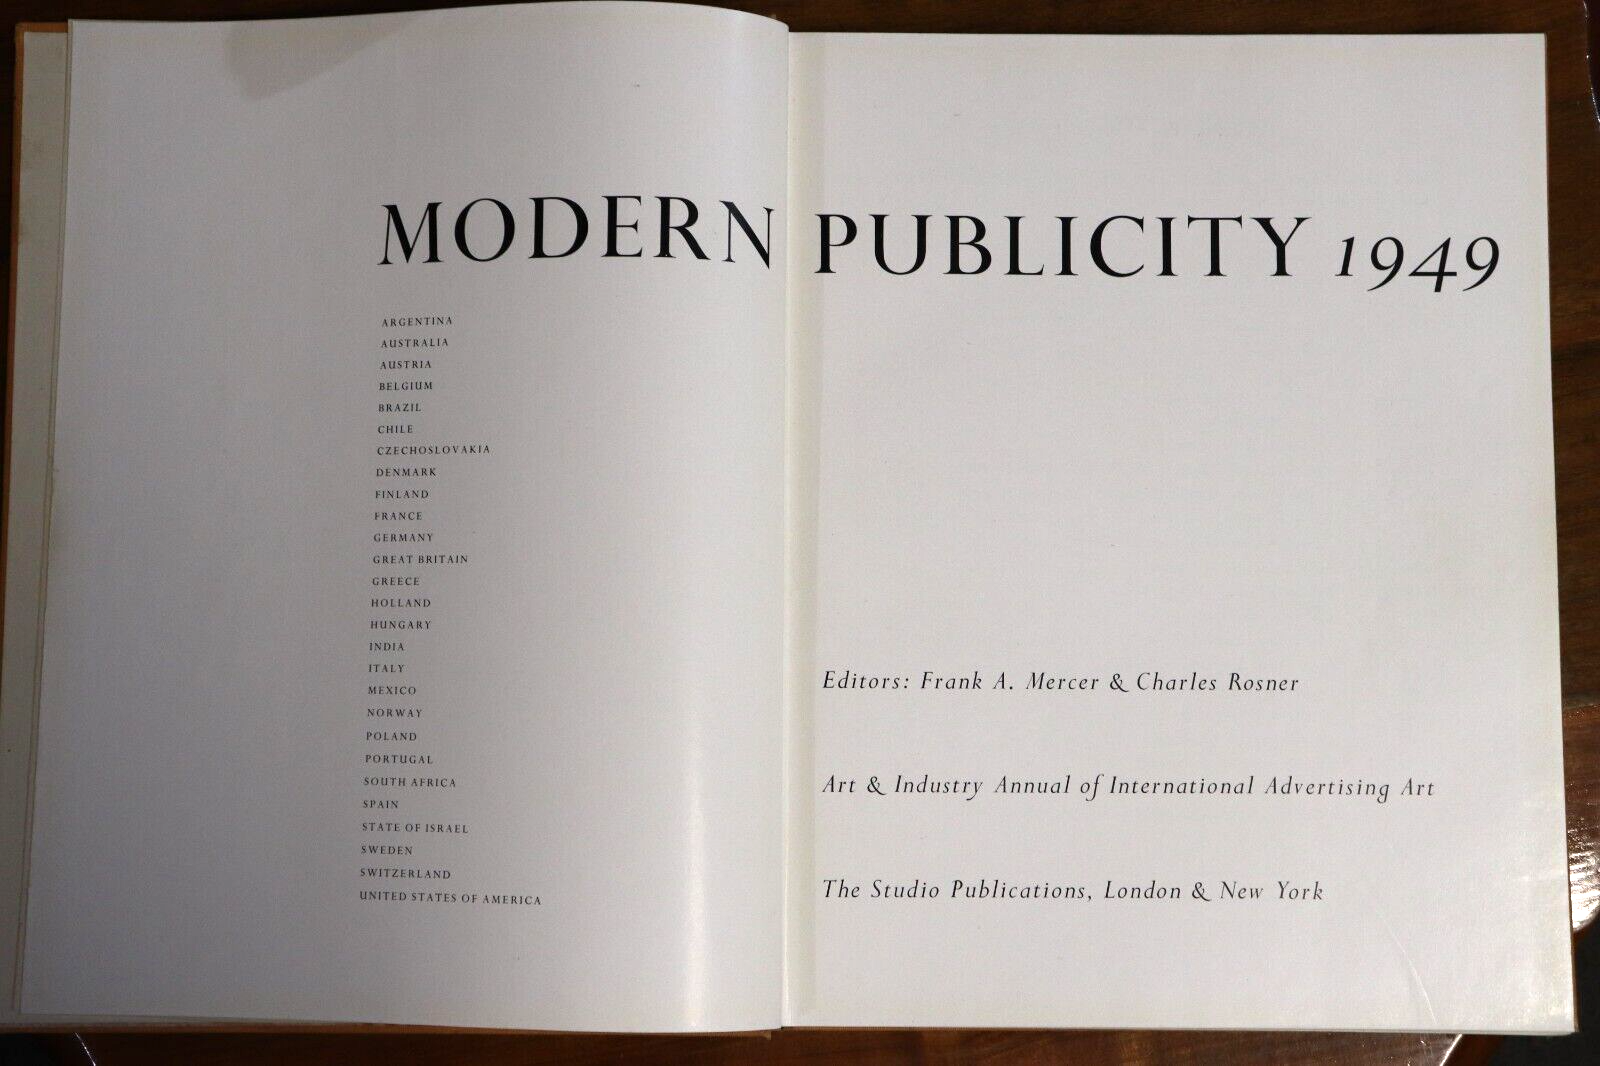 1949 Modern Publicity by Mercer & Rosner Antique Marketing Advertising Book - 0